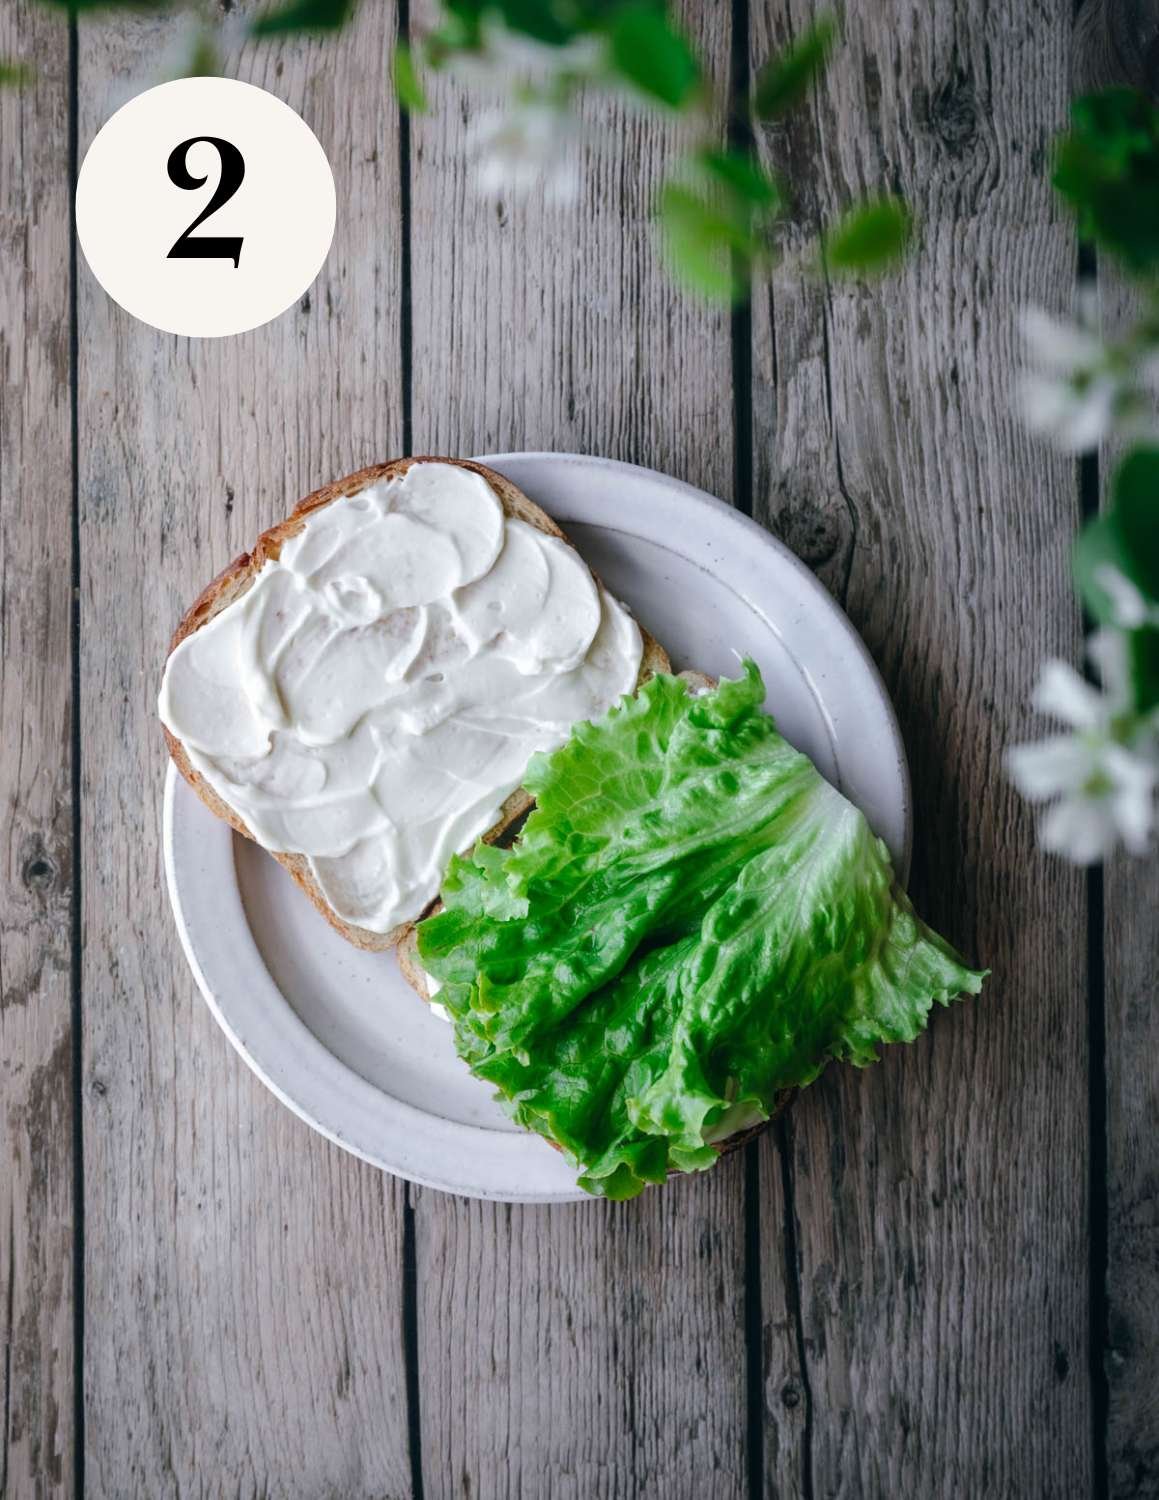 Lettuce on bread with vegan mayonnaise.